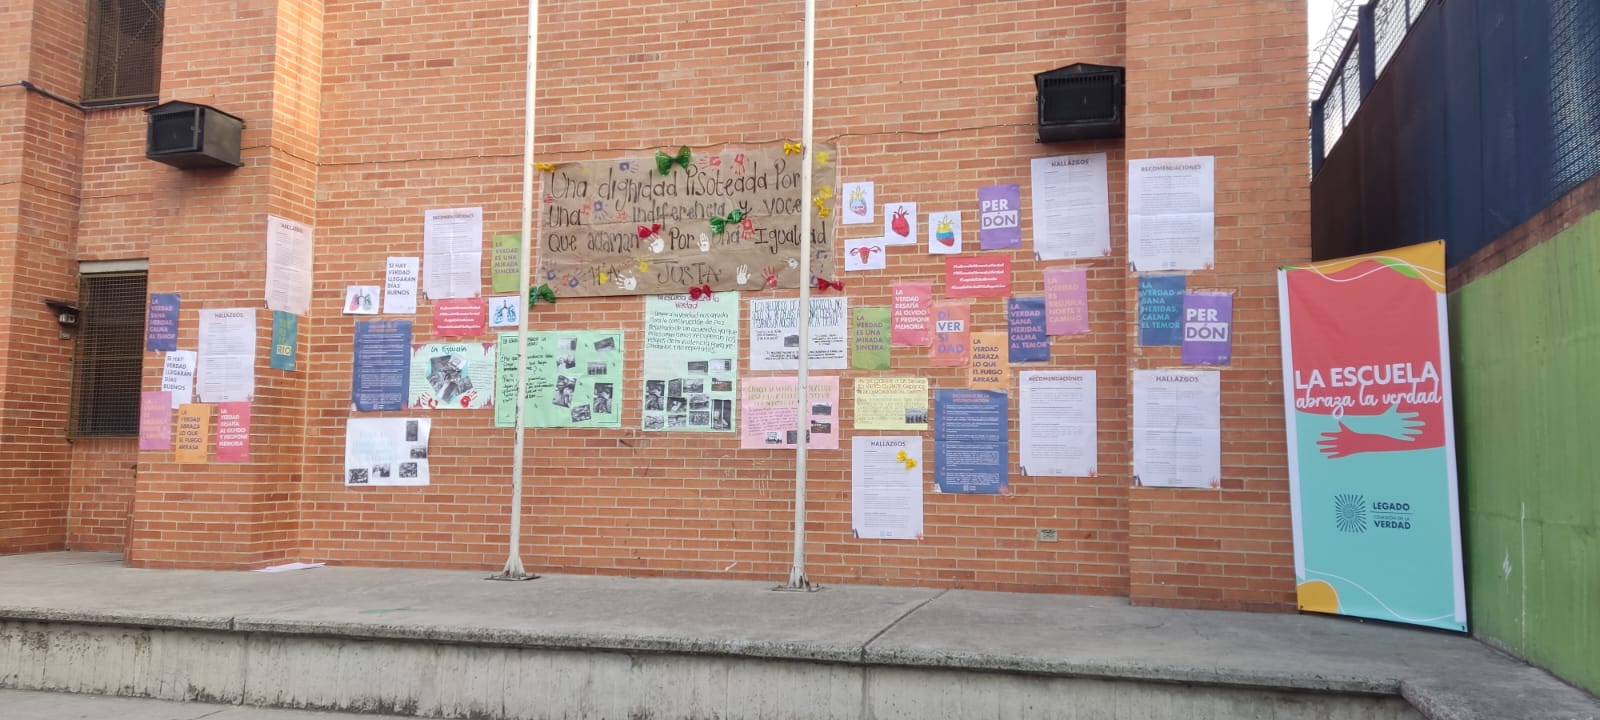 Colegio Rafael Uribe Uribe IED abraza la verdad, Ciudad Bolívar, Bogotá.